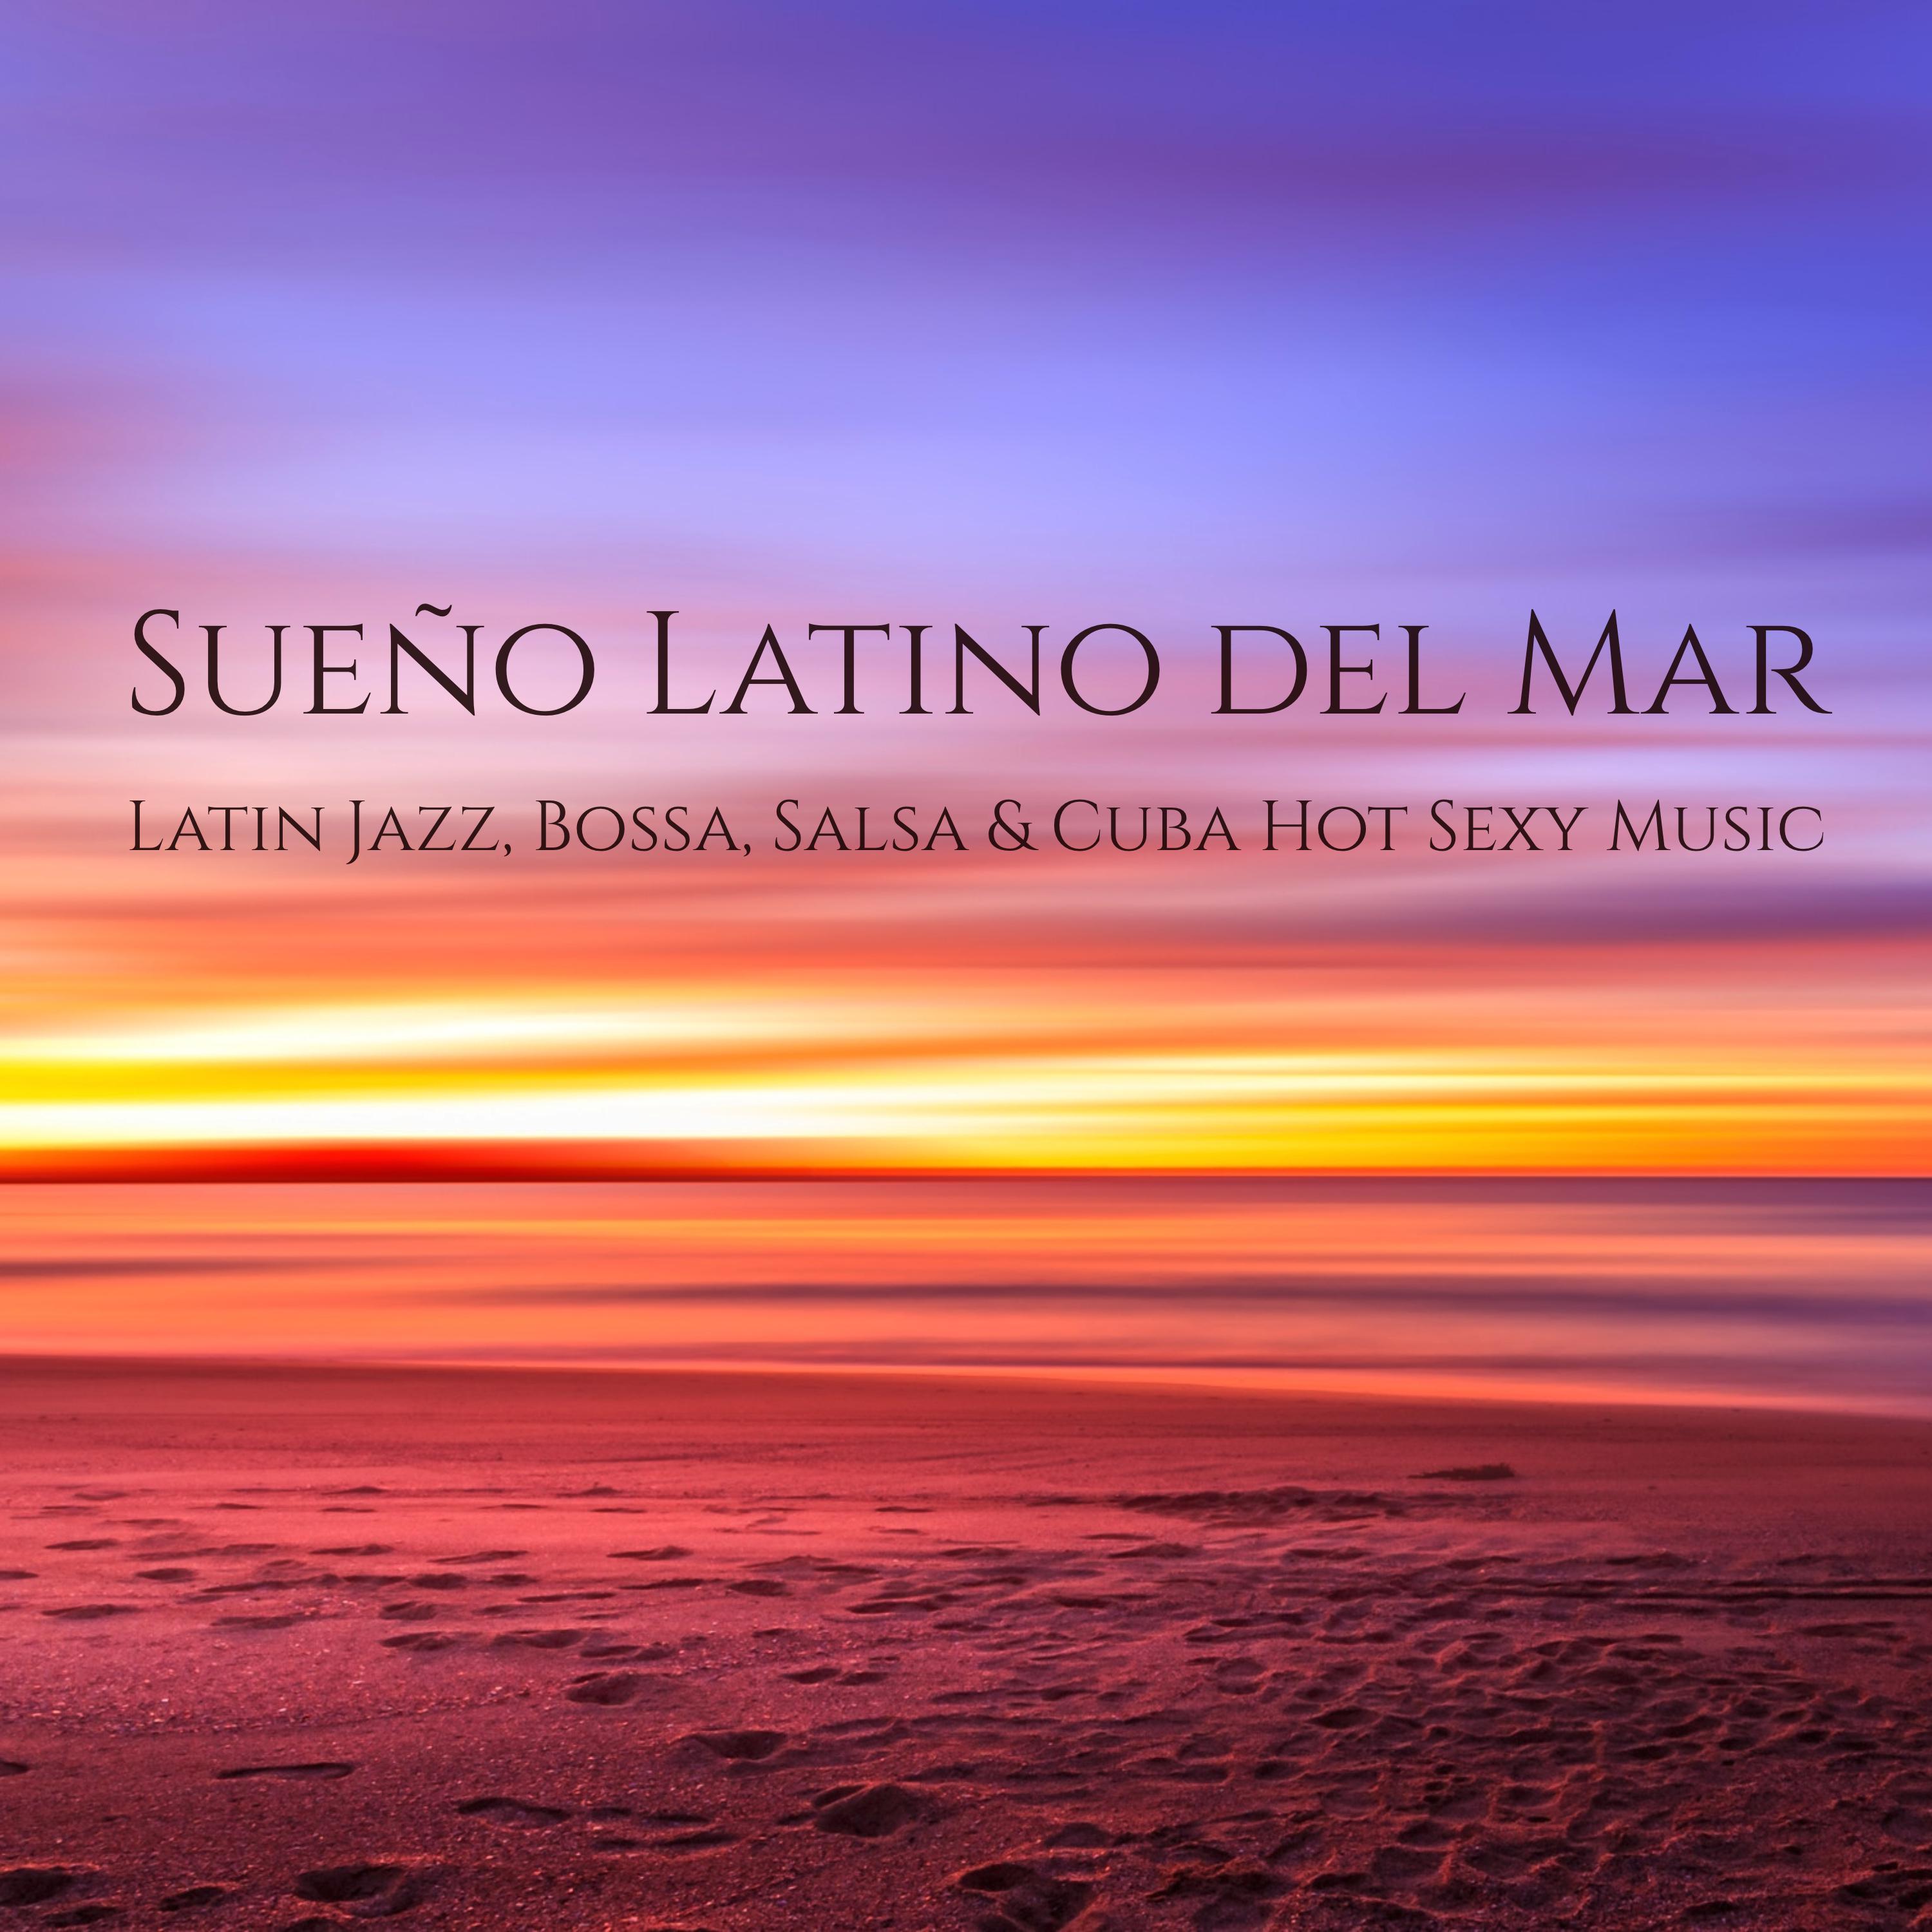 Sue o Latino del Mar  Latin Jazz, Bossa, Salsa  Cuba Hot  Music